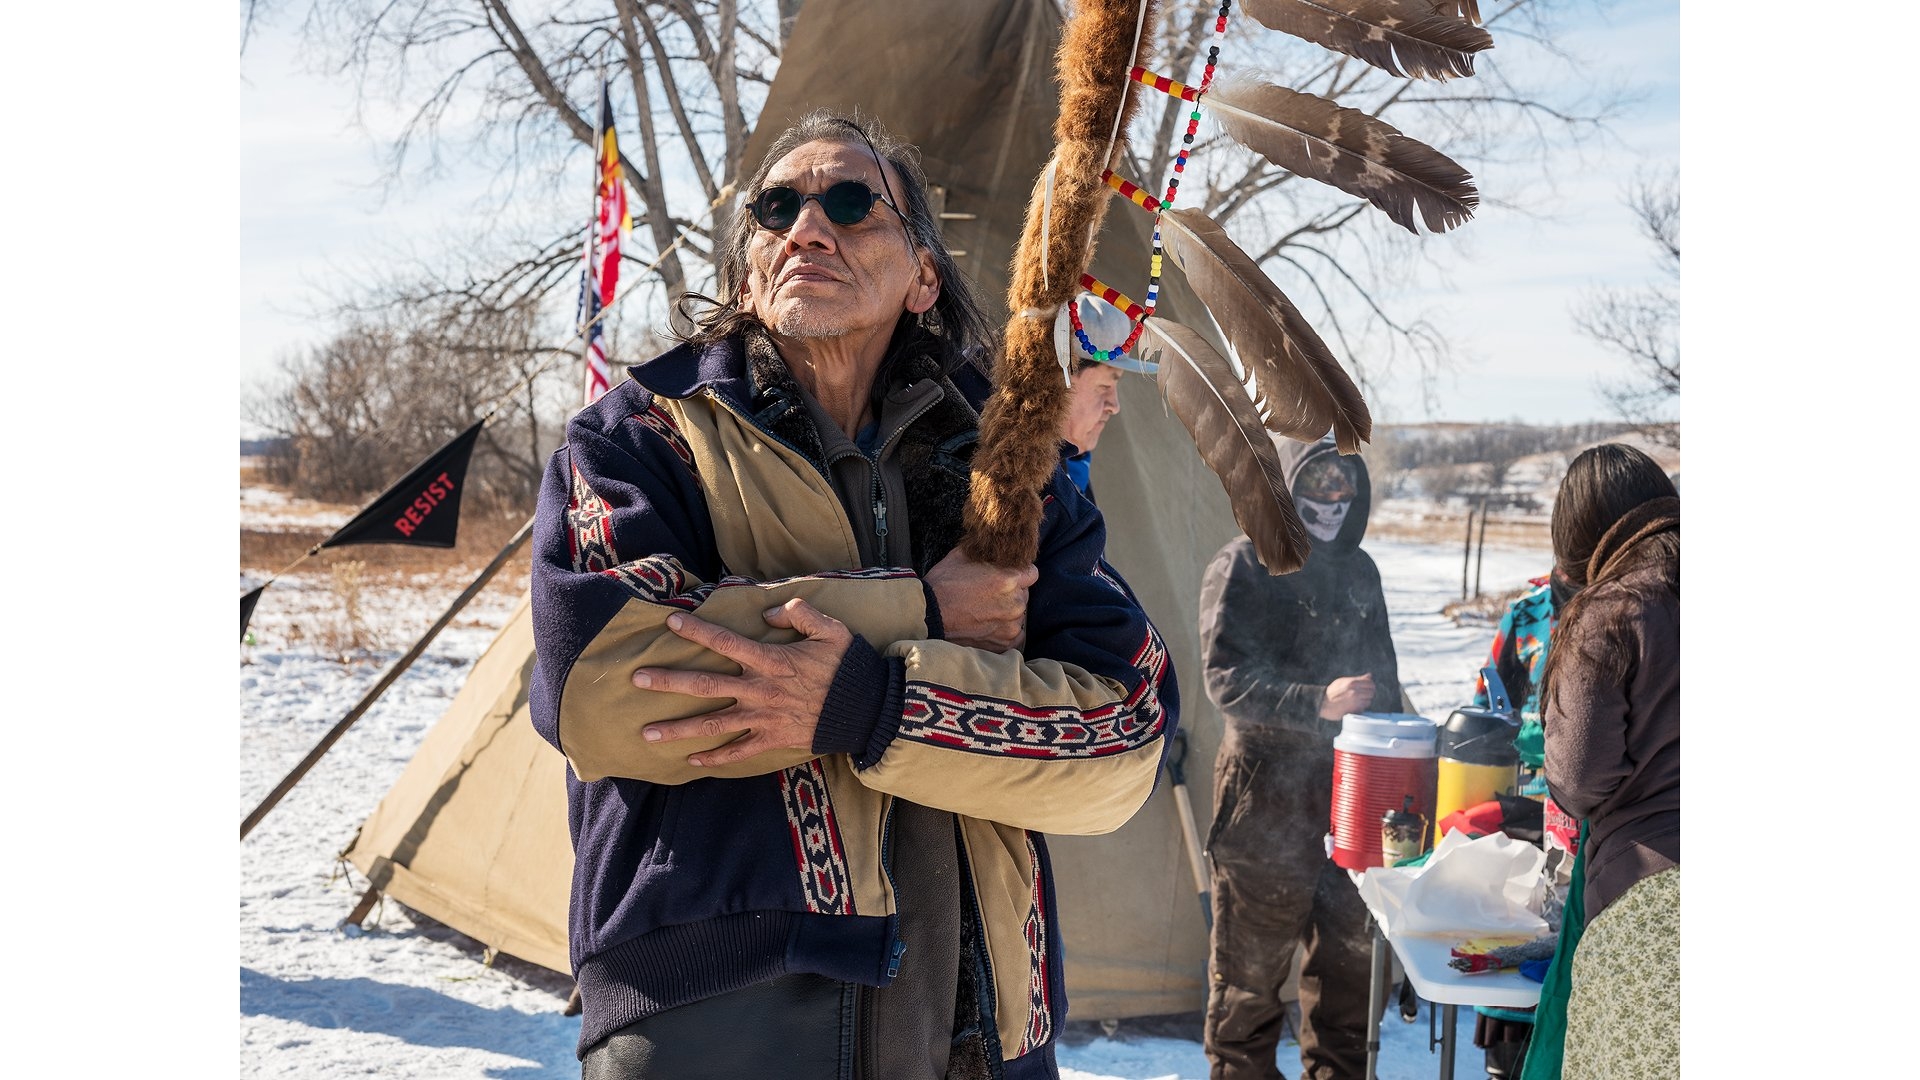 Teens wearing MAGA hats mocked a Native American elder. We spoke with him.